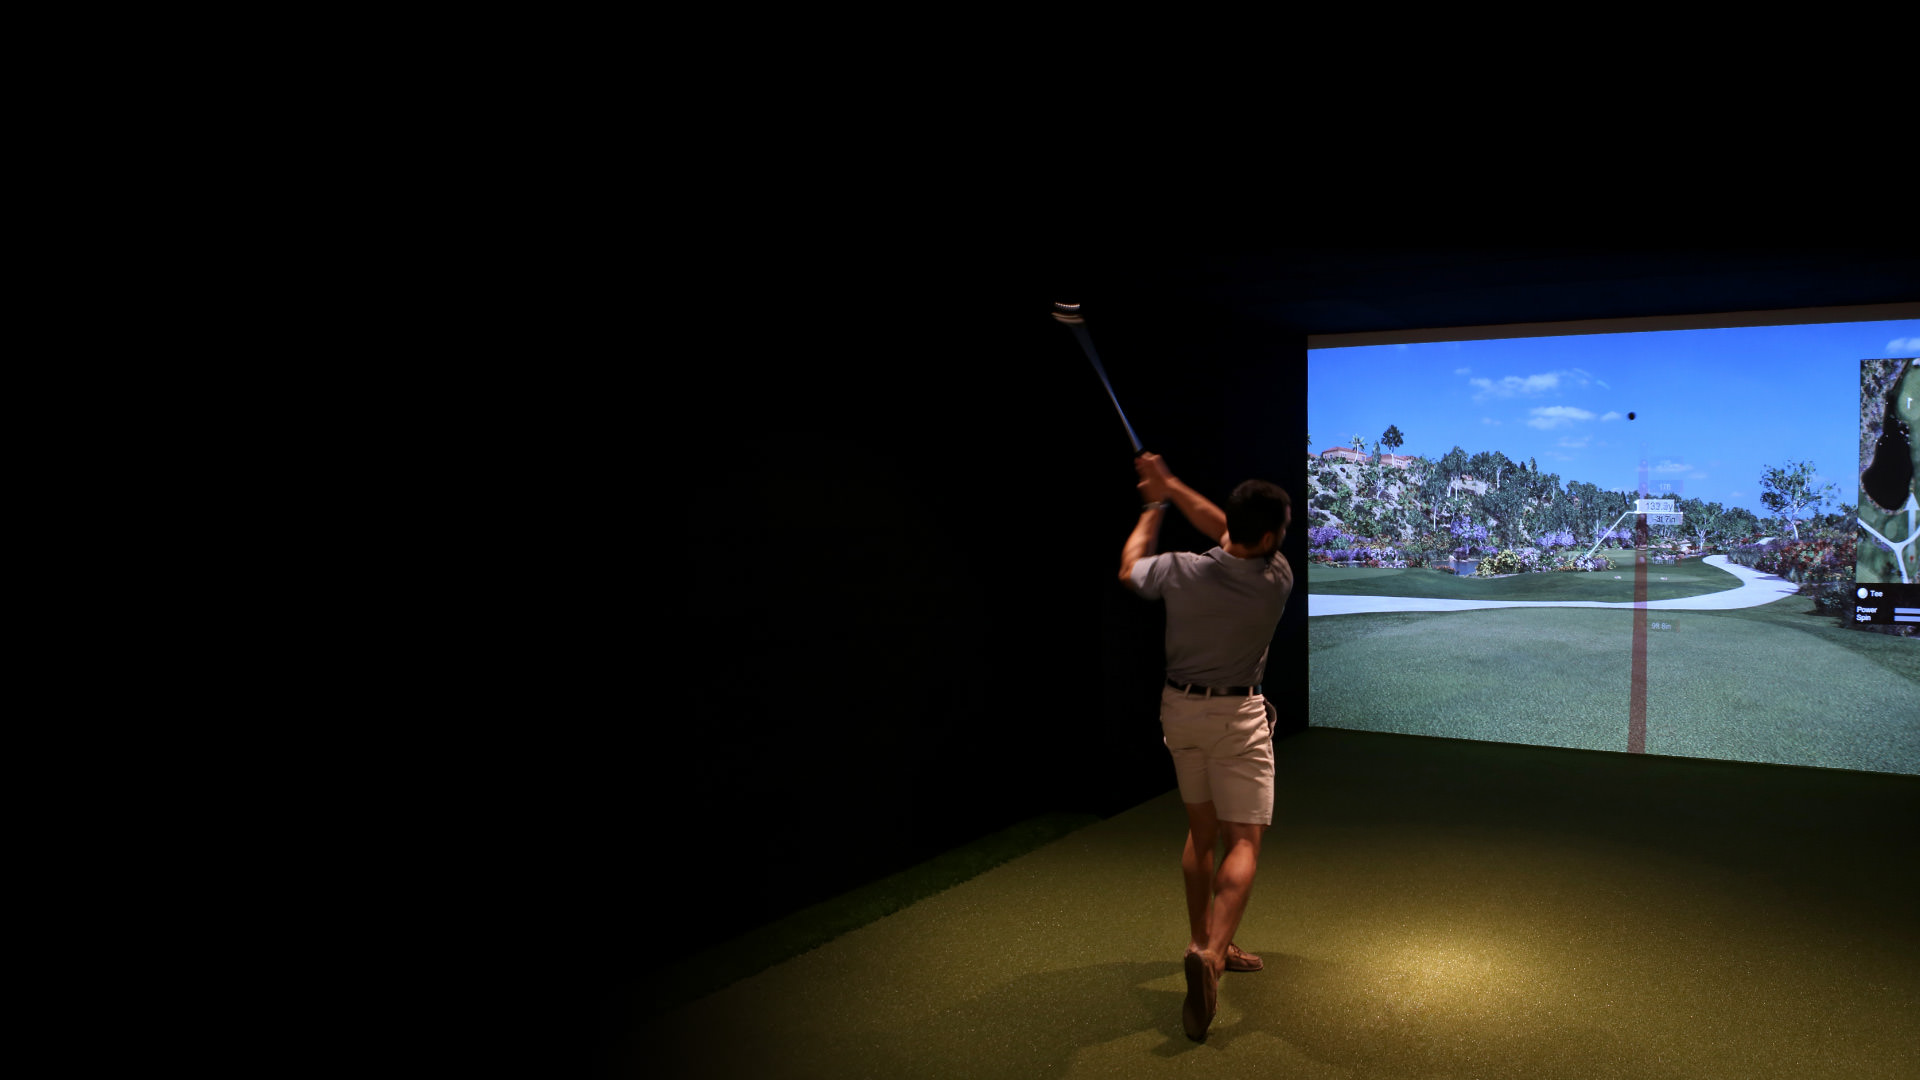 golf simulators